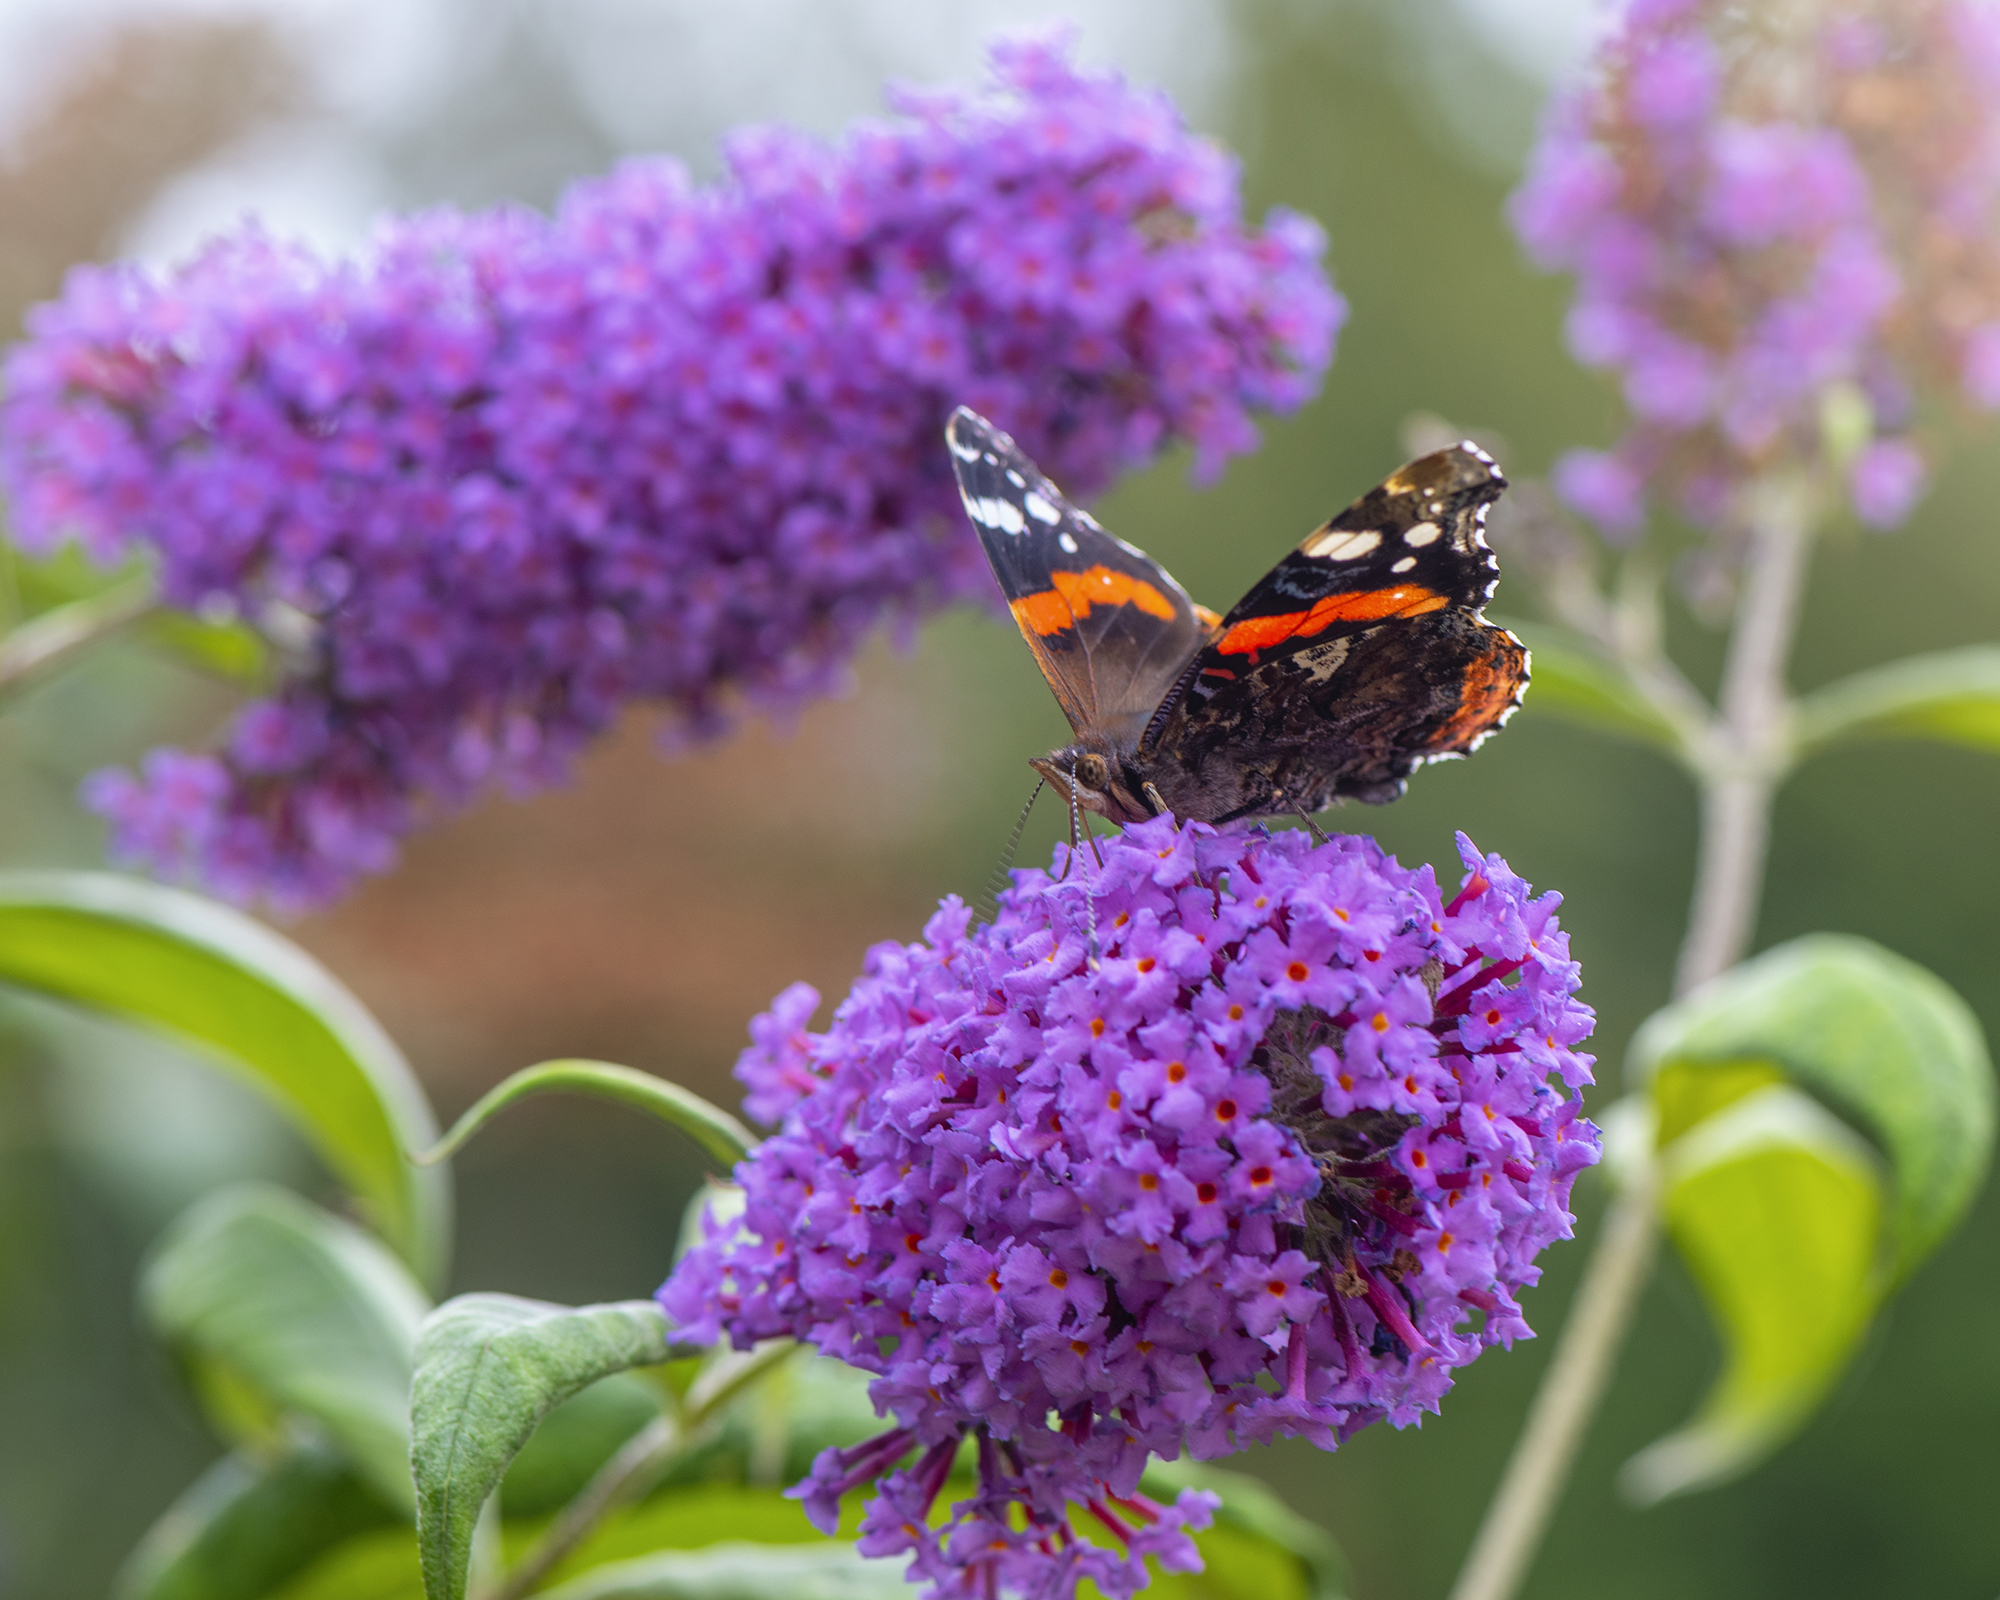 Butterfly lands on a purple flower of buddleia davidii - or butterfly bush